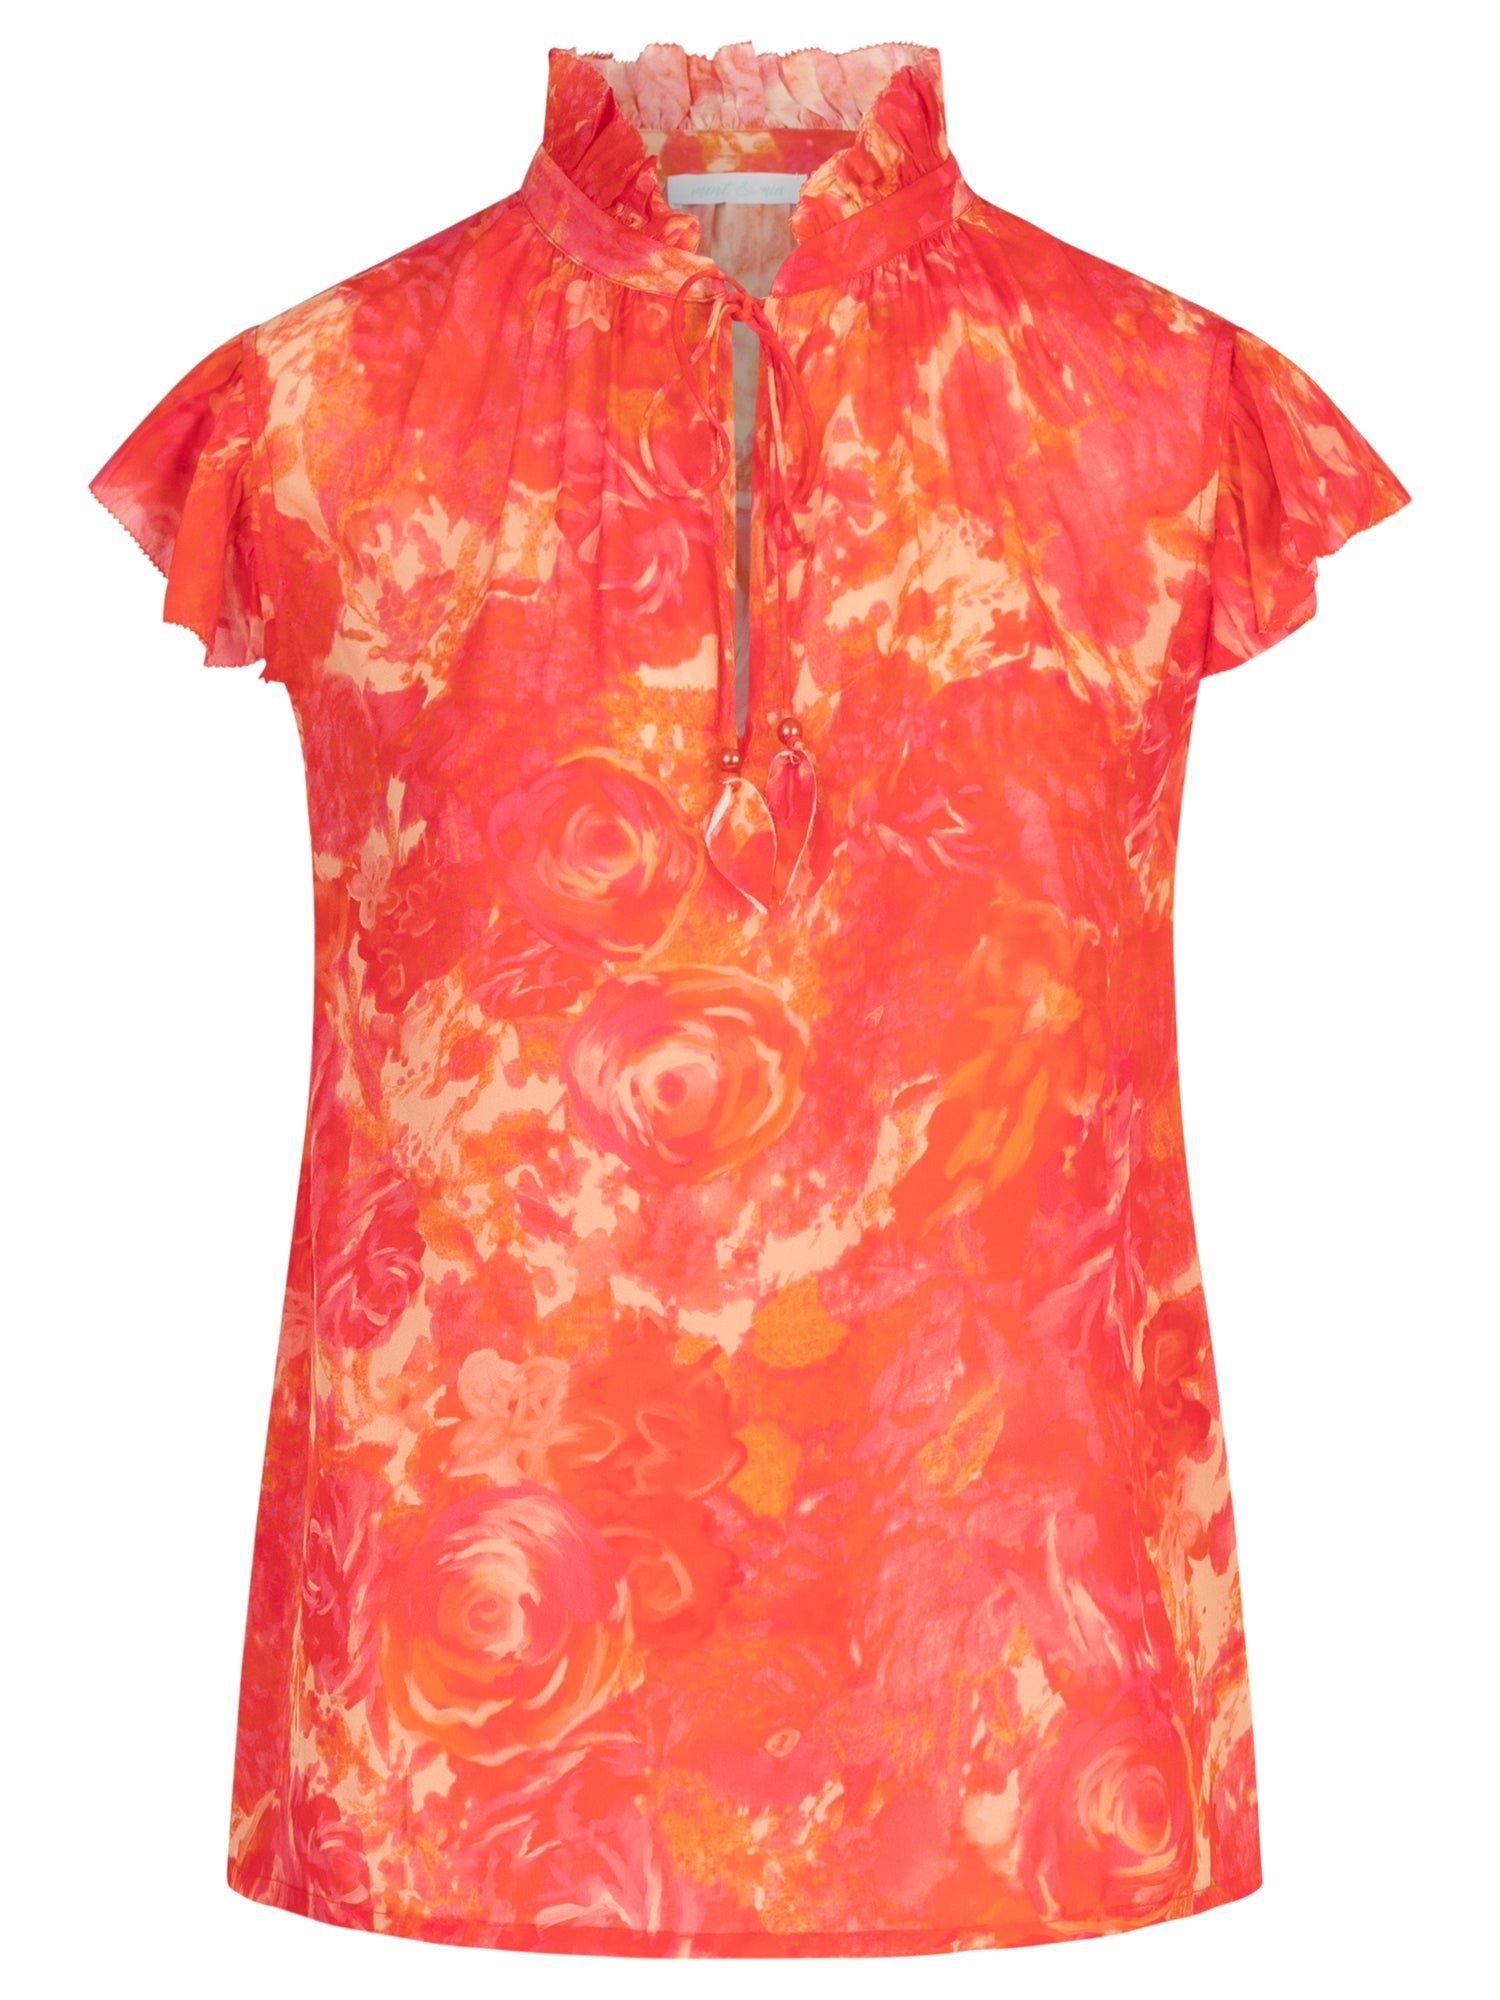 Mint & Mia Sommer Bluse aus hochwertigem Viskose Material mit Feminin Stil | korallenrot-multicolor